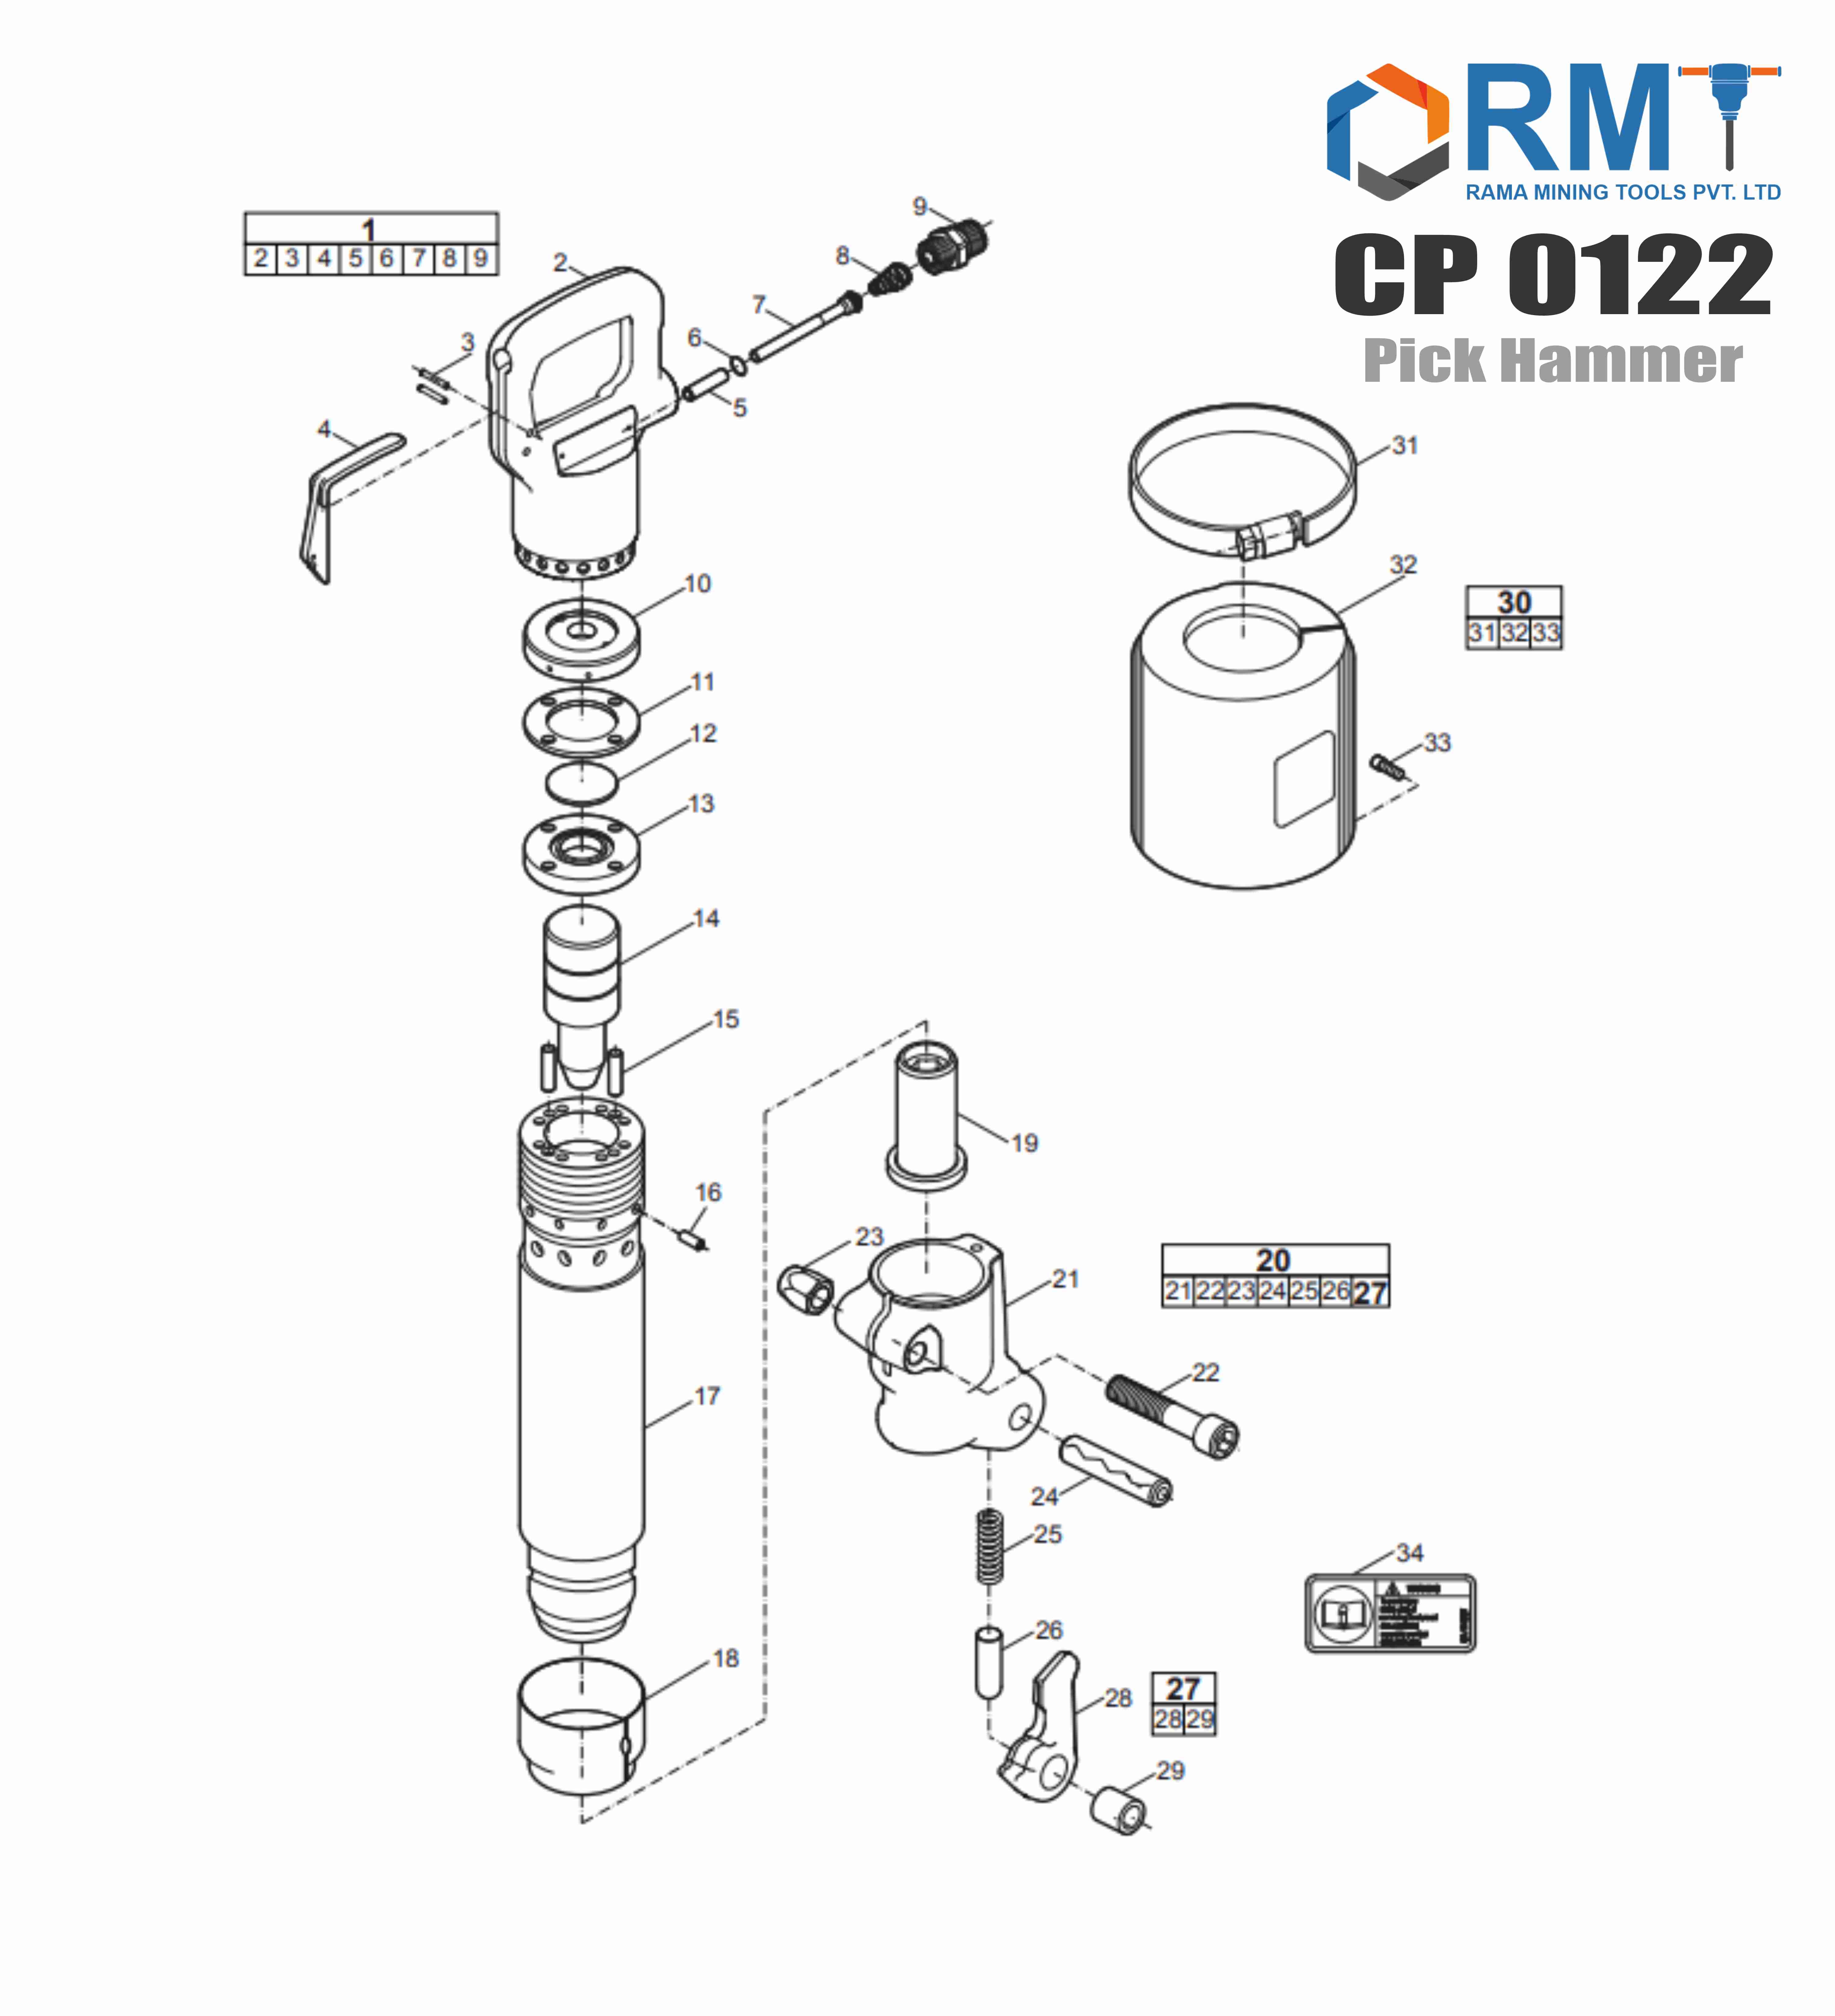 CP 0122 - Pick Hammer